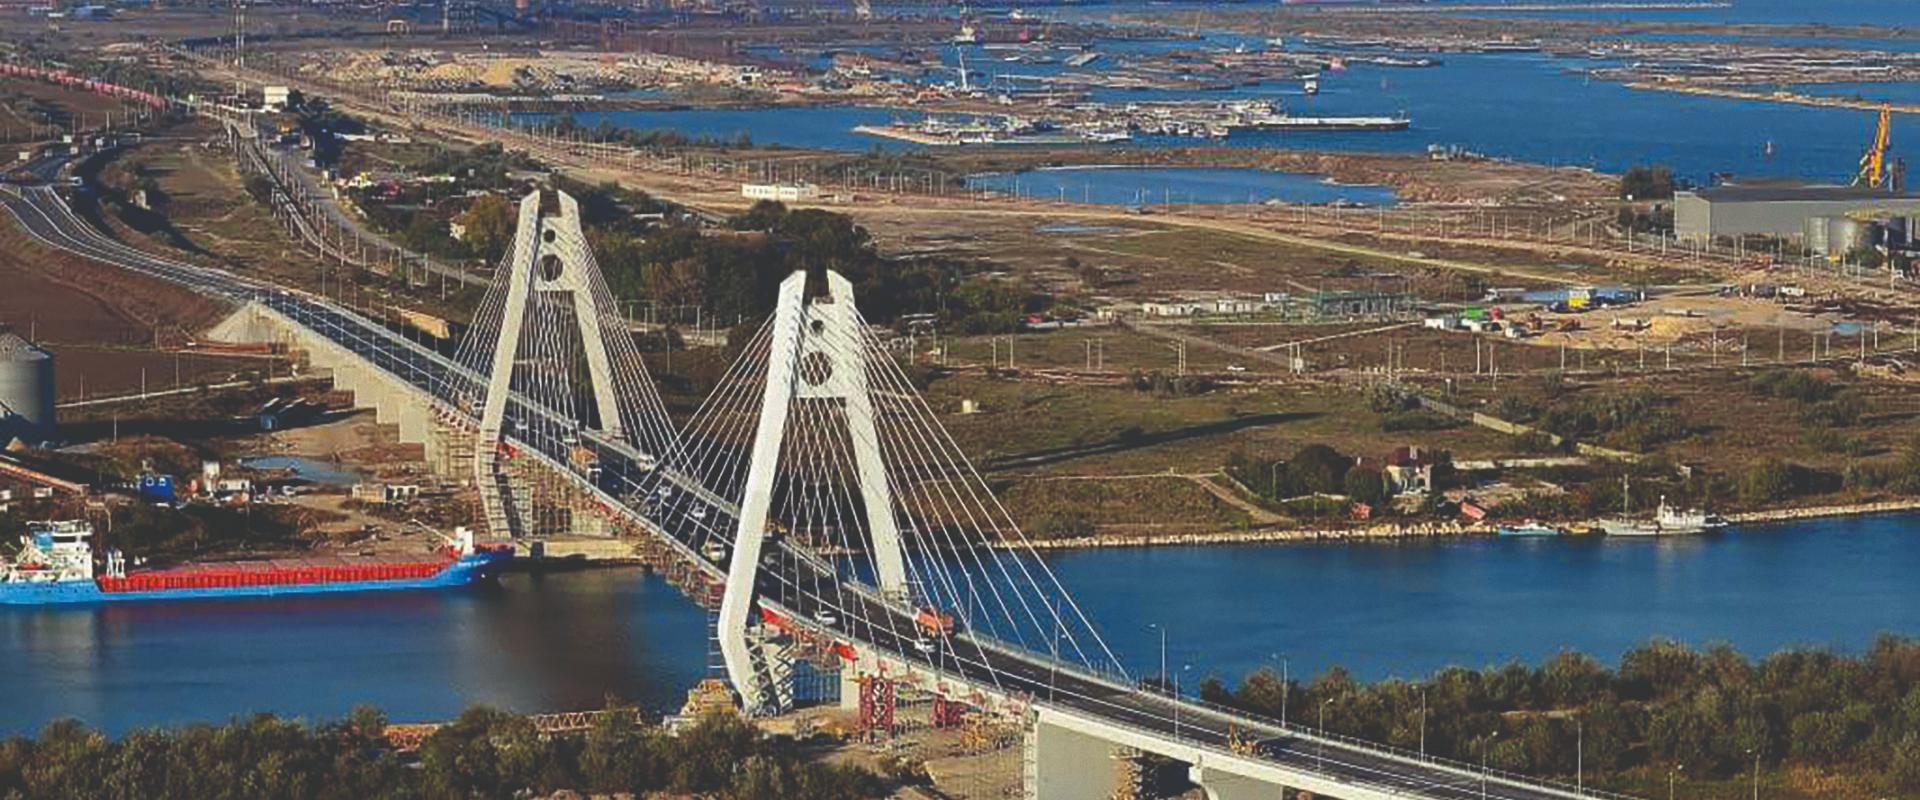 Bridge Over the Danube